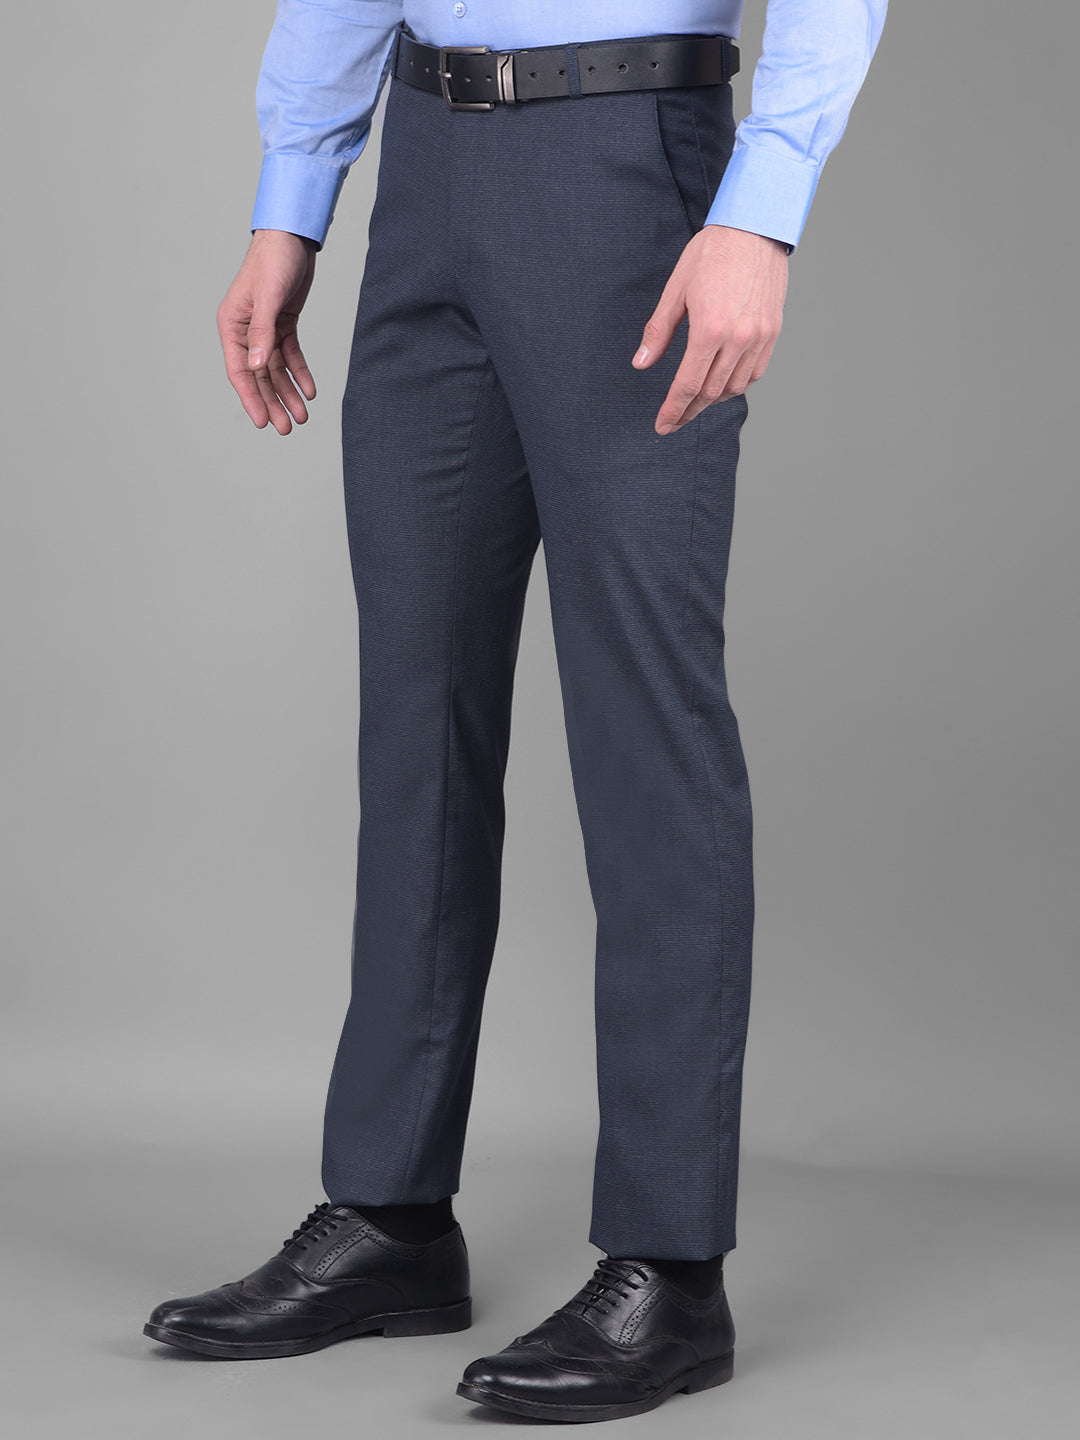 cobb navy grey ultra fit formal trouser